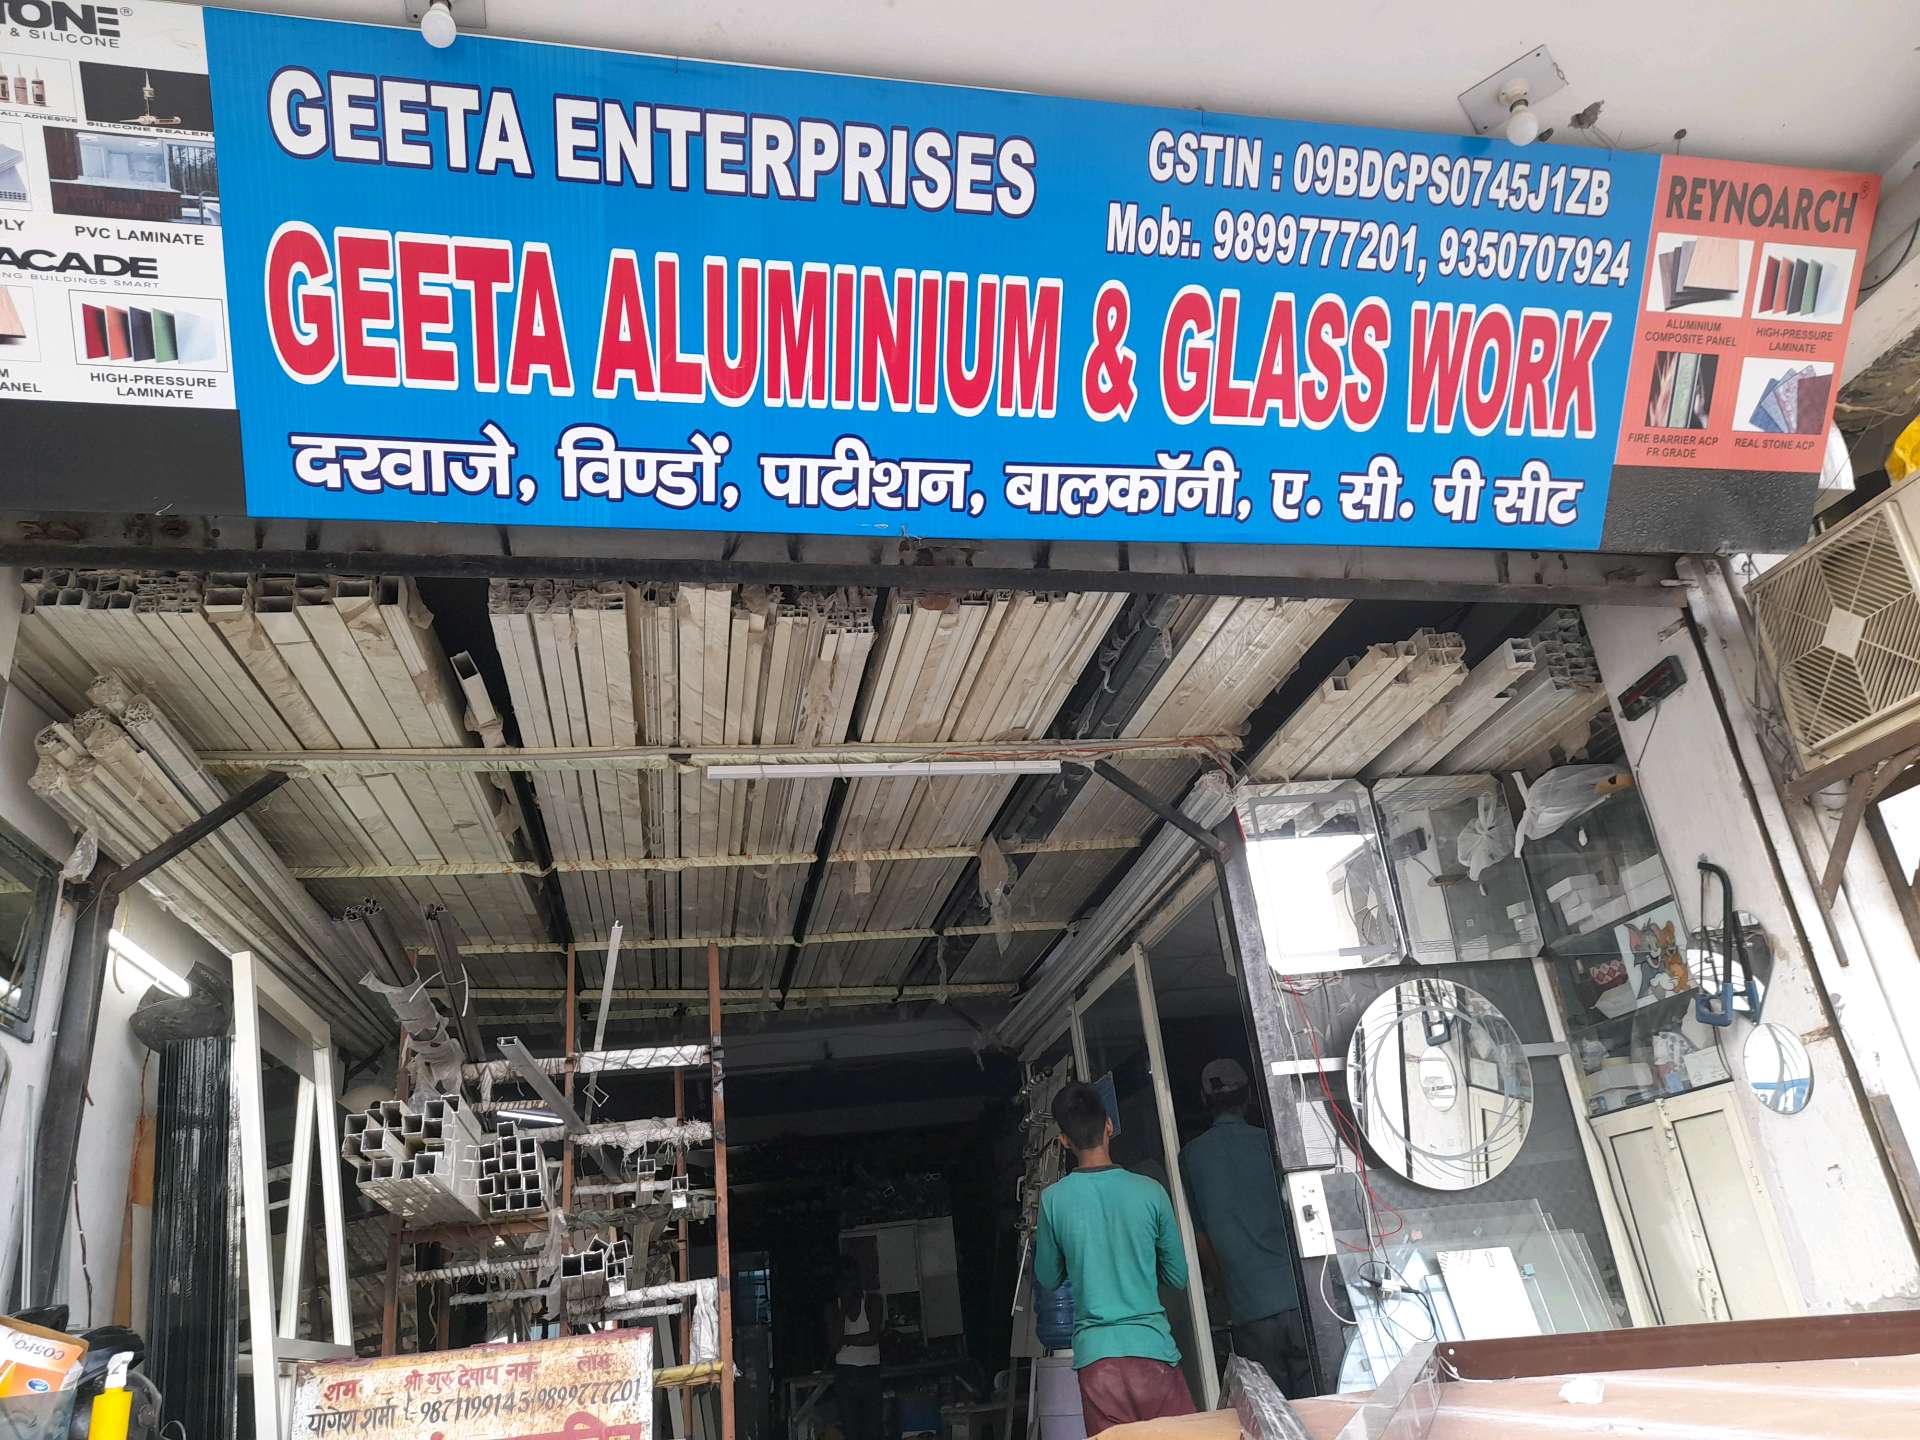 Geeta Enterprises